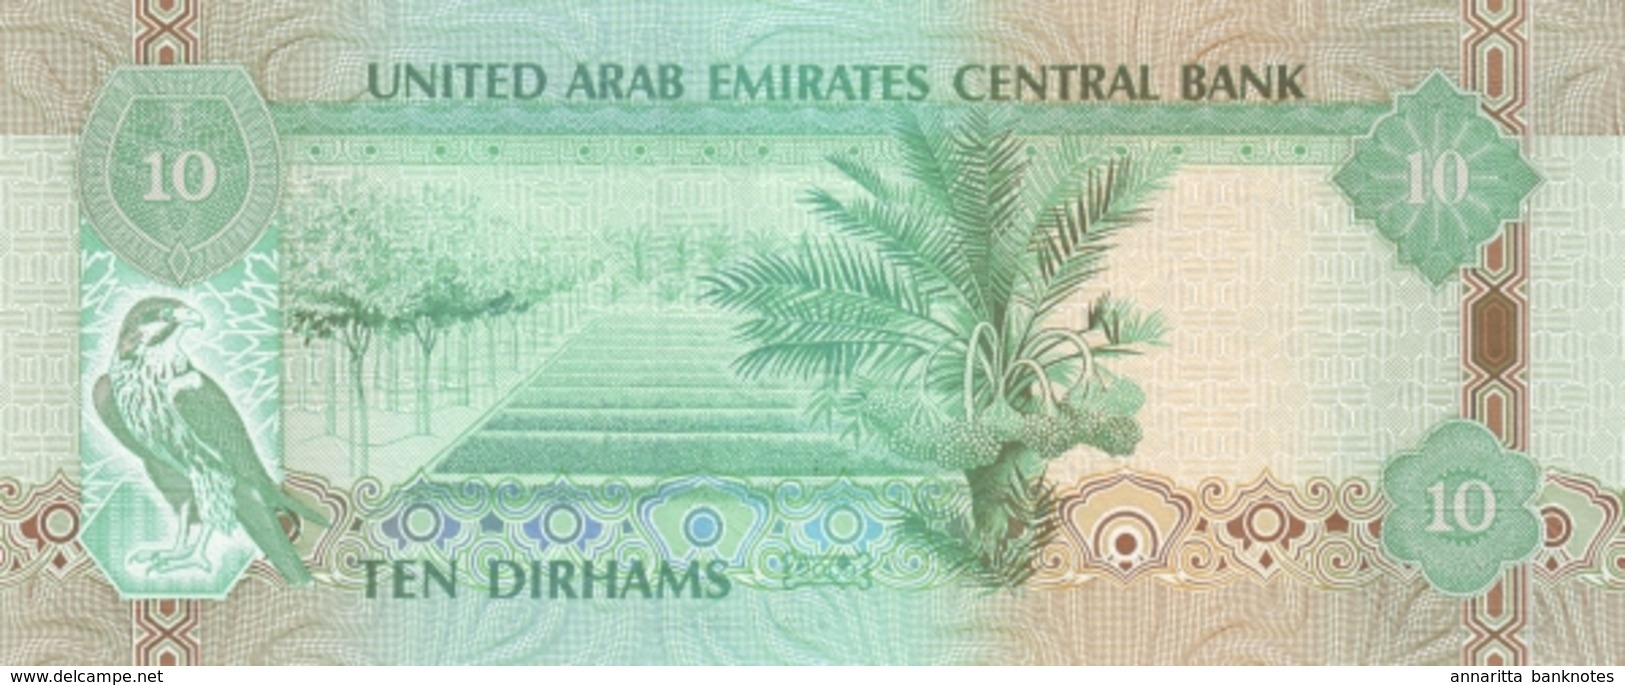 UNITED ARAB EMIRATES 10 DIRHAMS 1430 (2009) P-27a UNC  [AE227a] - Verenigde Arabische Emiraten